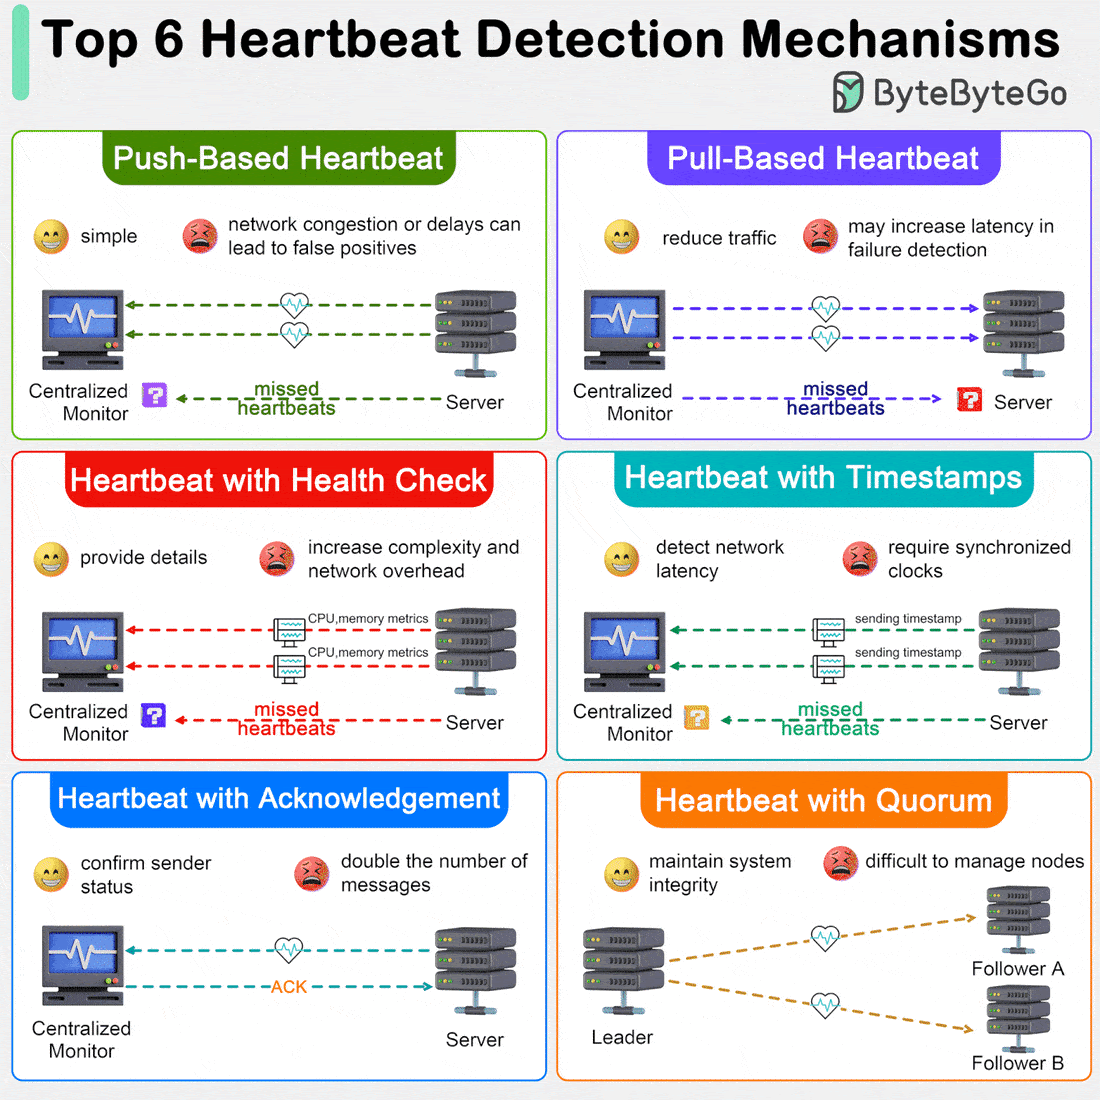 Top 6 Heartbeat Detection Mechanisms